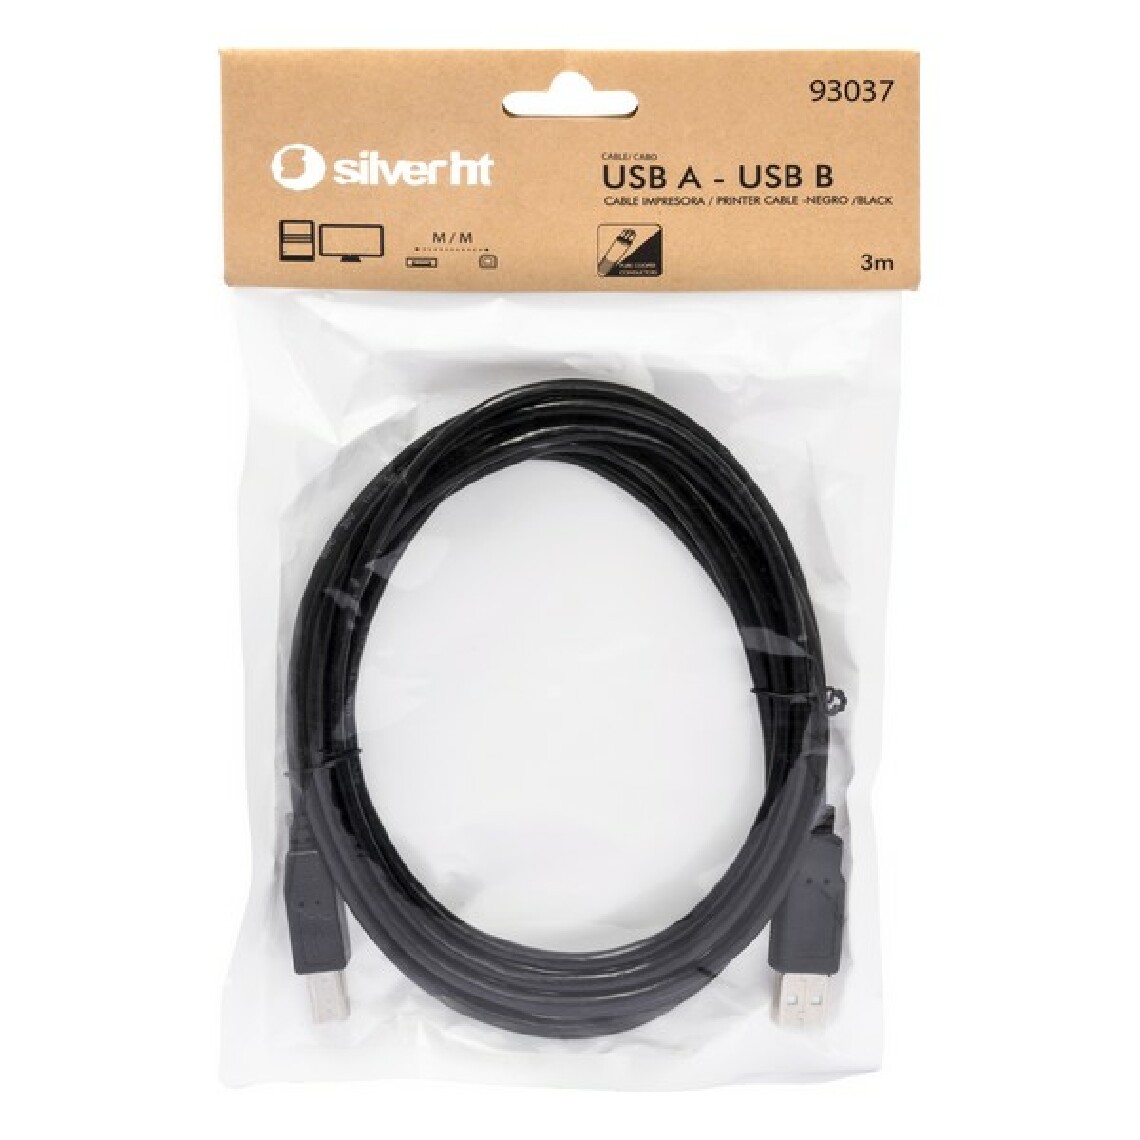 Uknow - Câble USB 2.0 A vers USB B Silver Electronics 93037 3 m Noir - Câble antenne